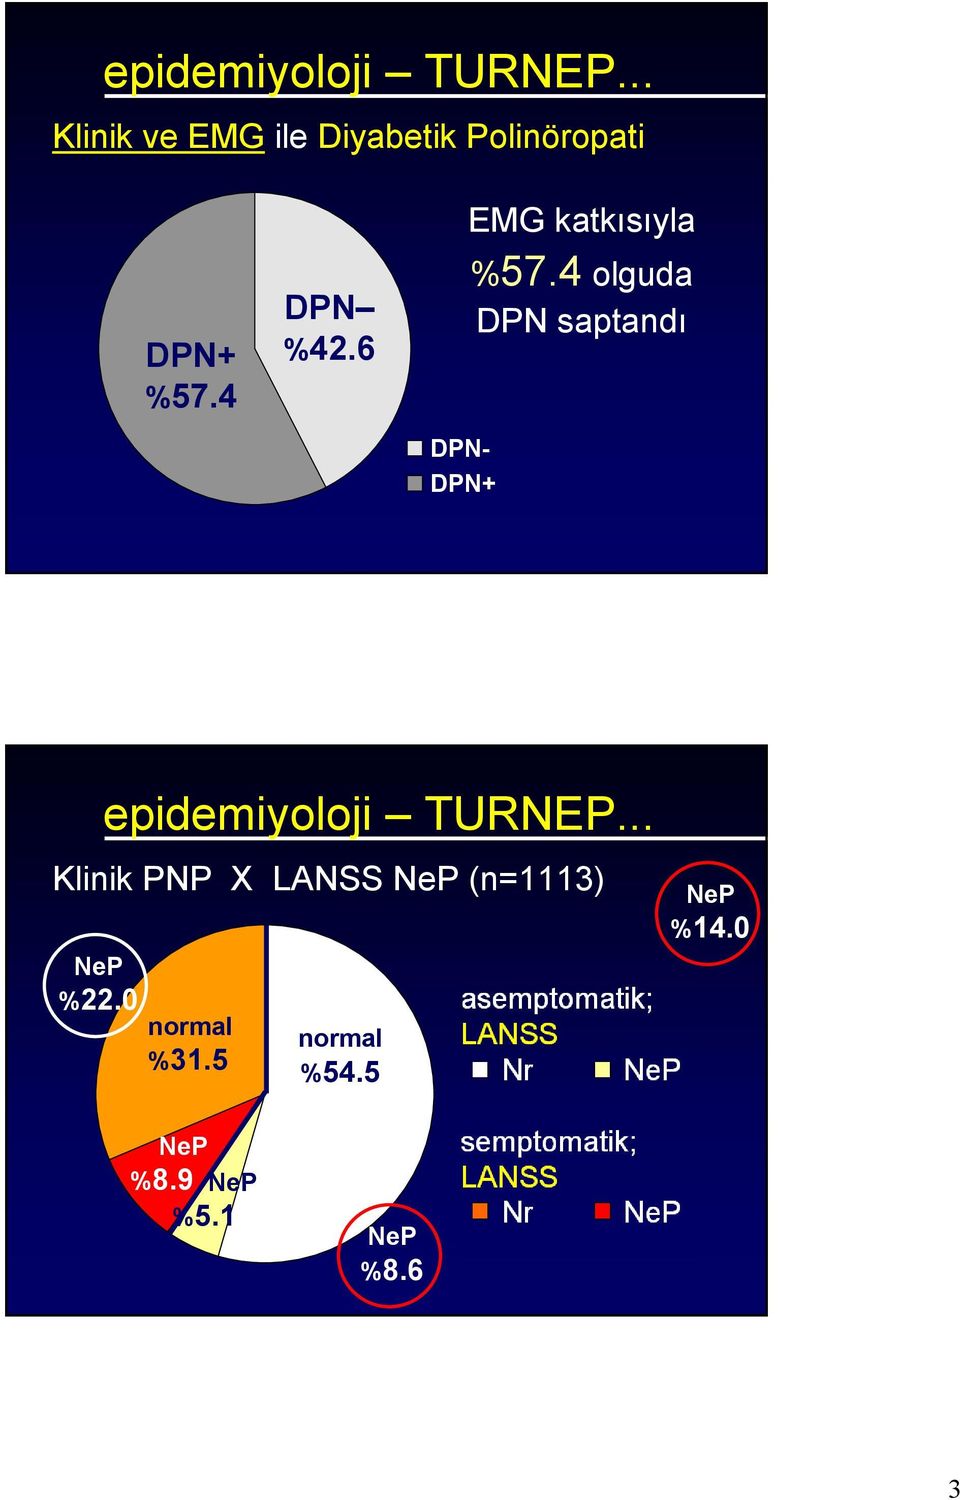 .. Klinik PNP X LANSS NeP (n=1113) NeP %22.0 normal %31.5 NeP %8.9 NeP %5.